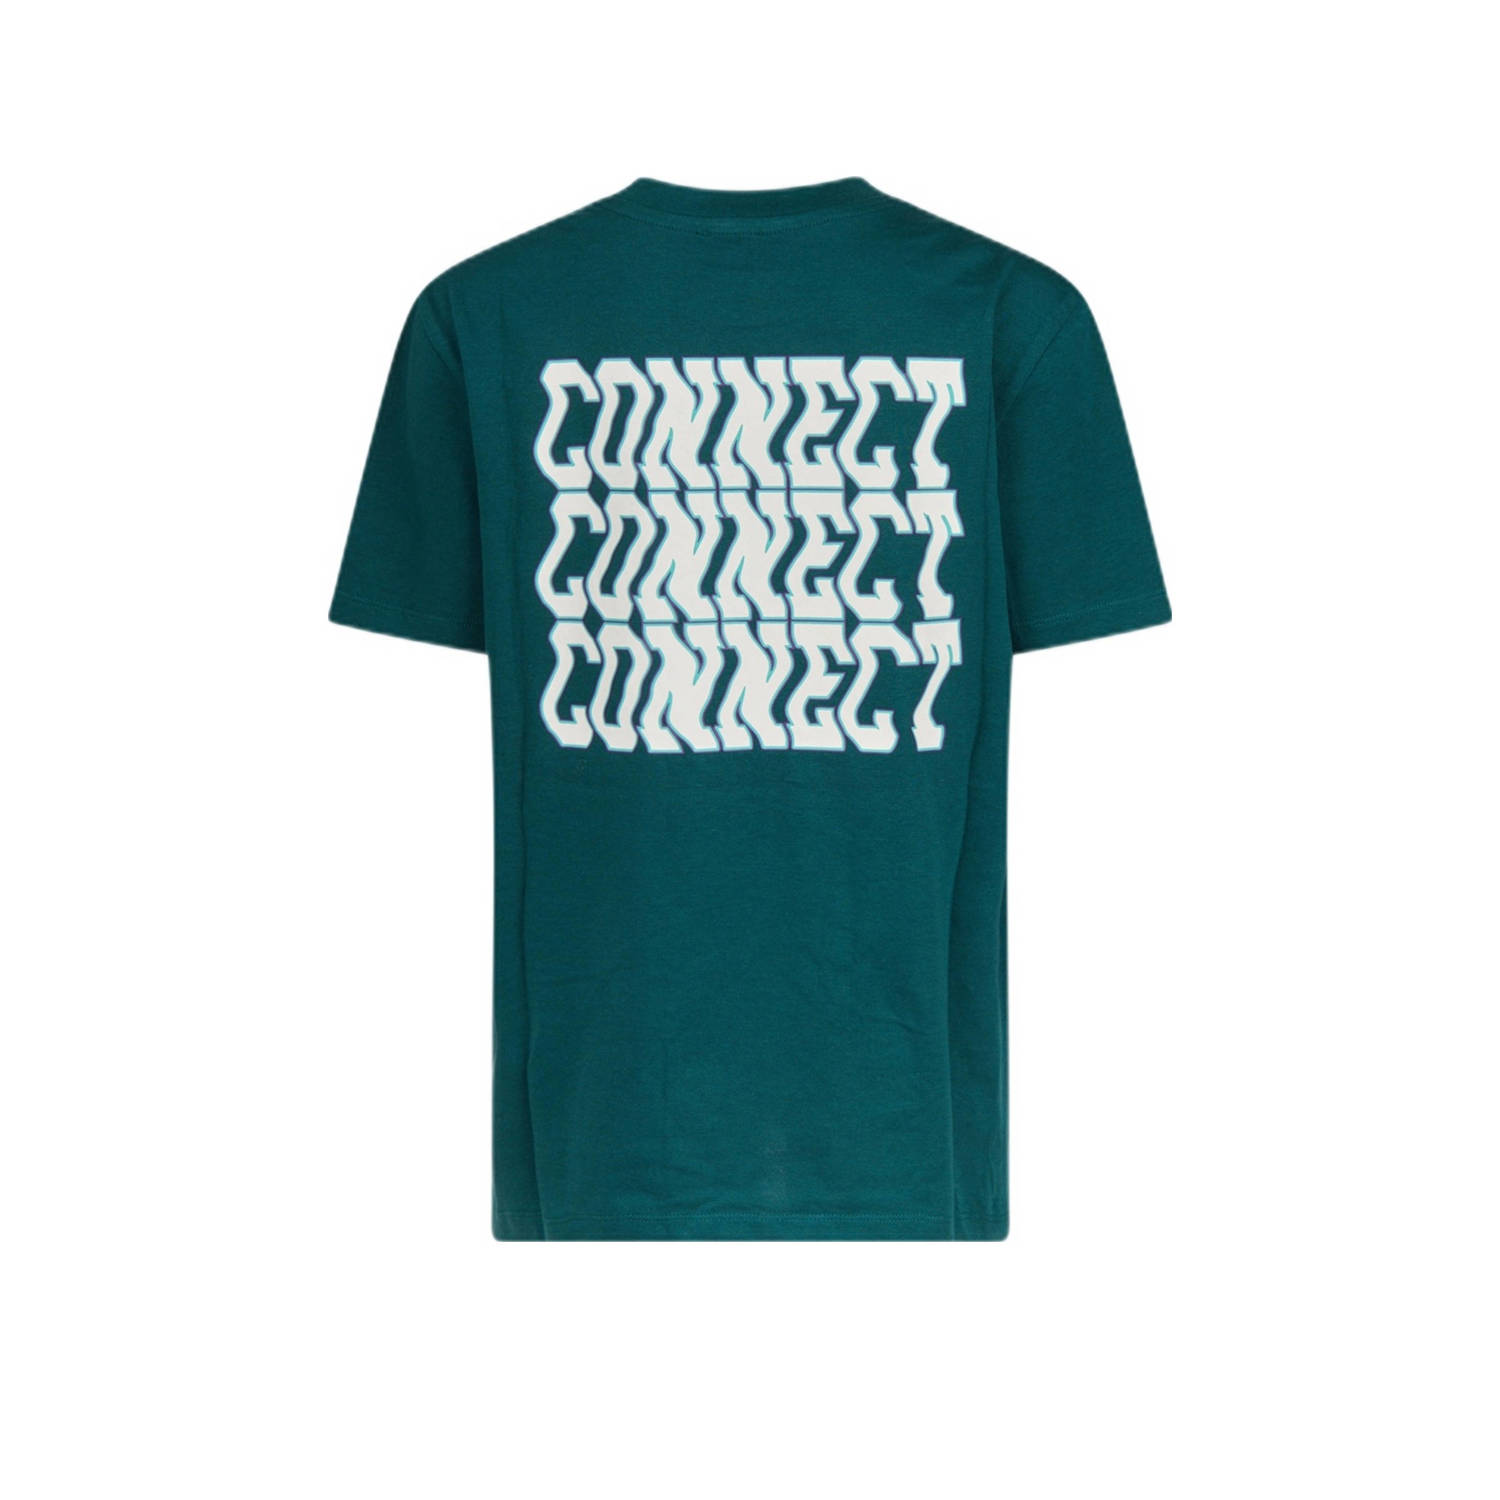 Shoeby T-shirt met backprint donkergroen